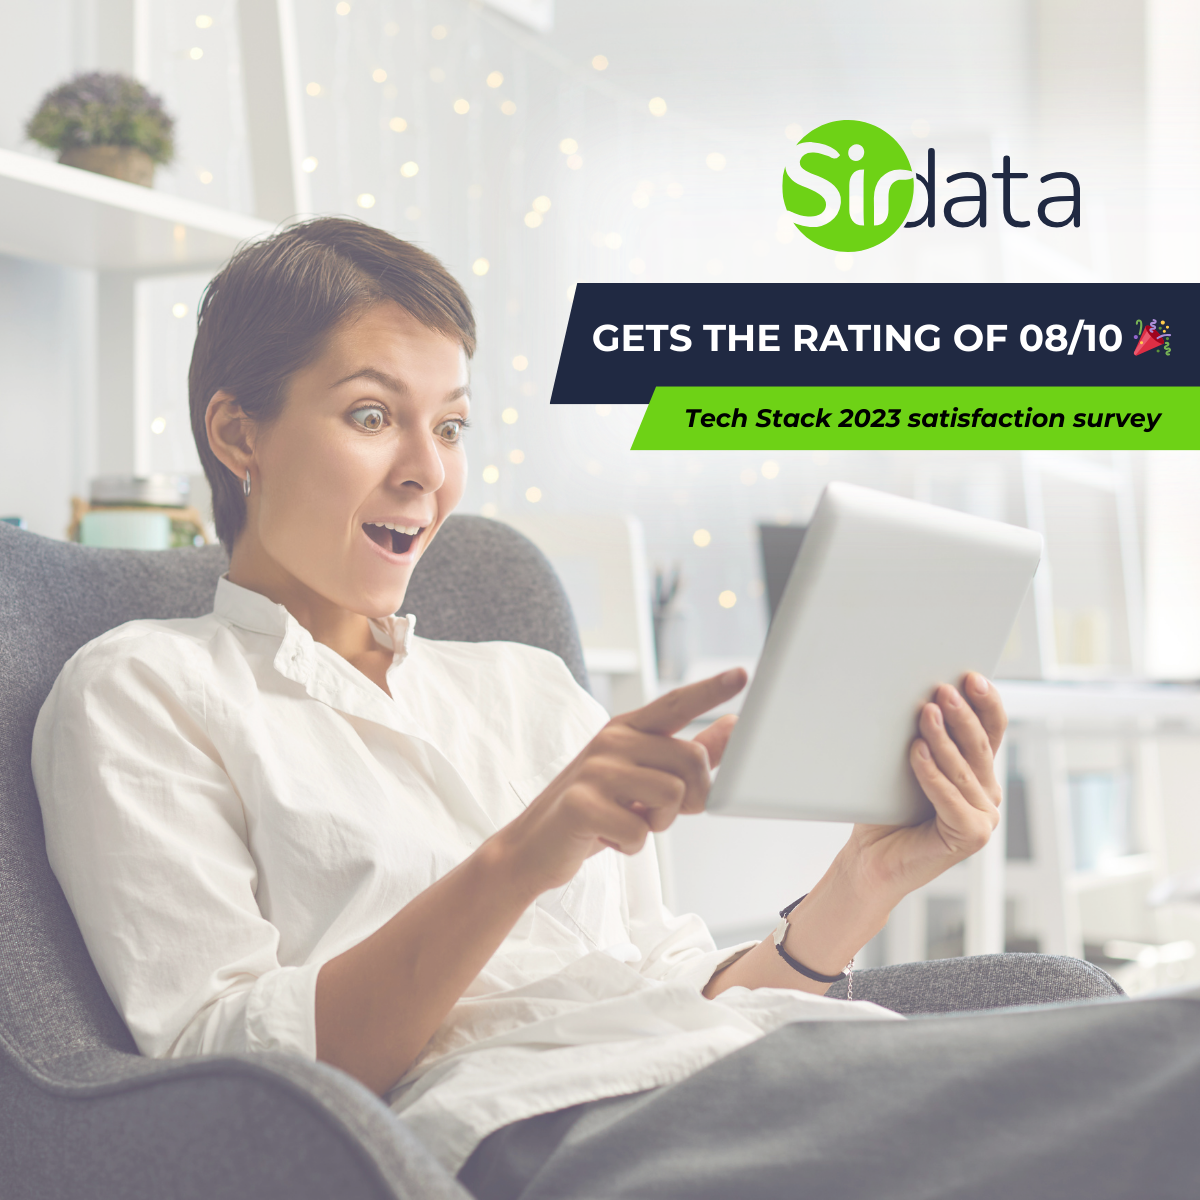 Tech Stack 2023 satisfaction survey: Sirdata obtains an impressive 8/10!